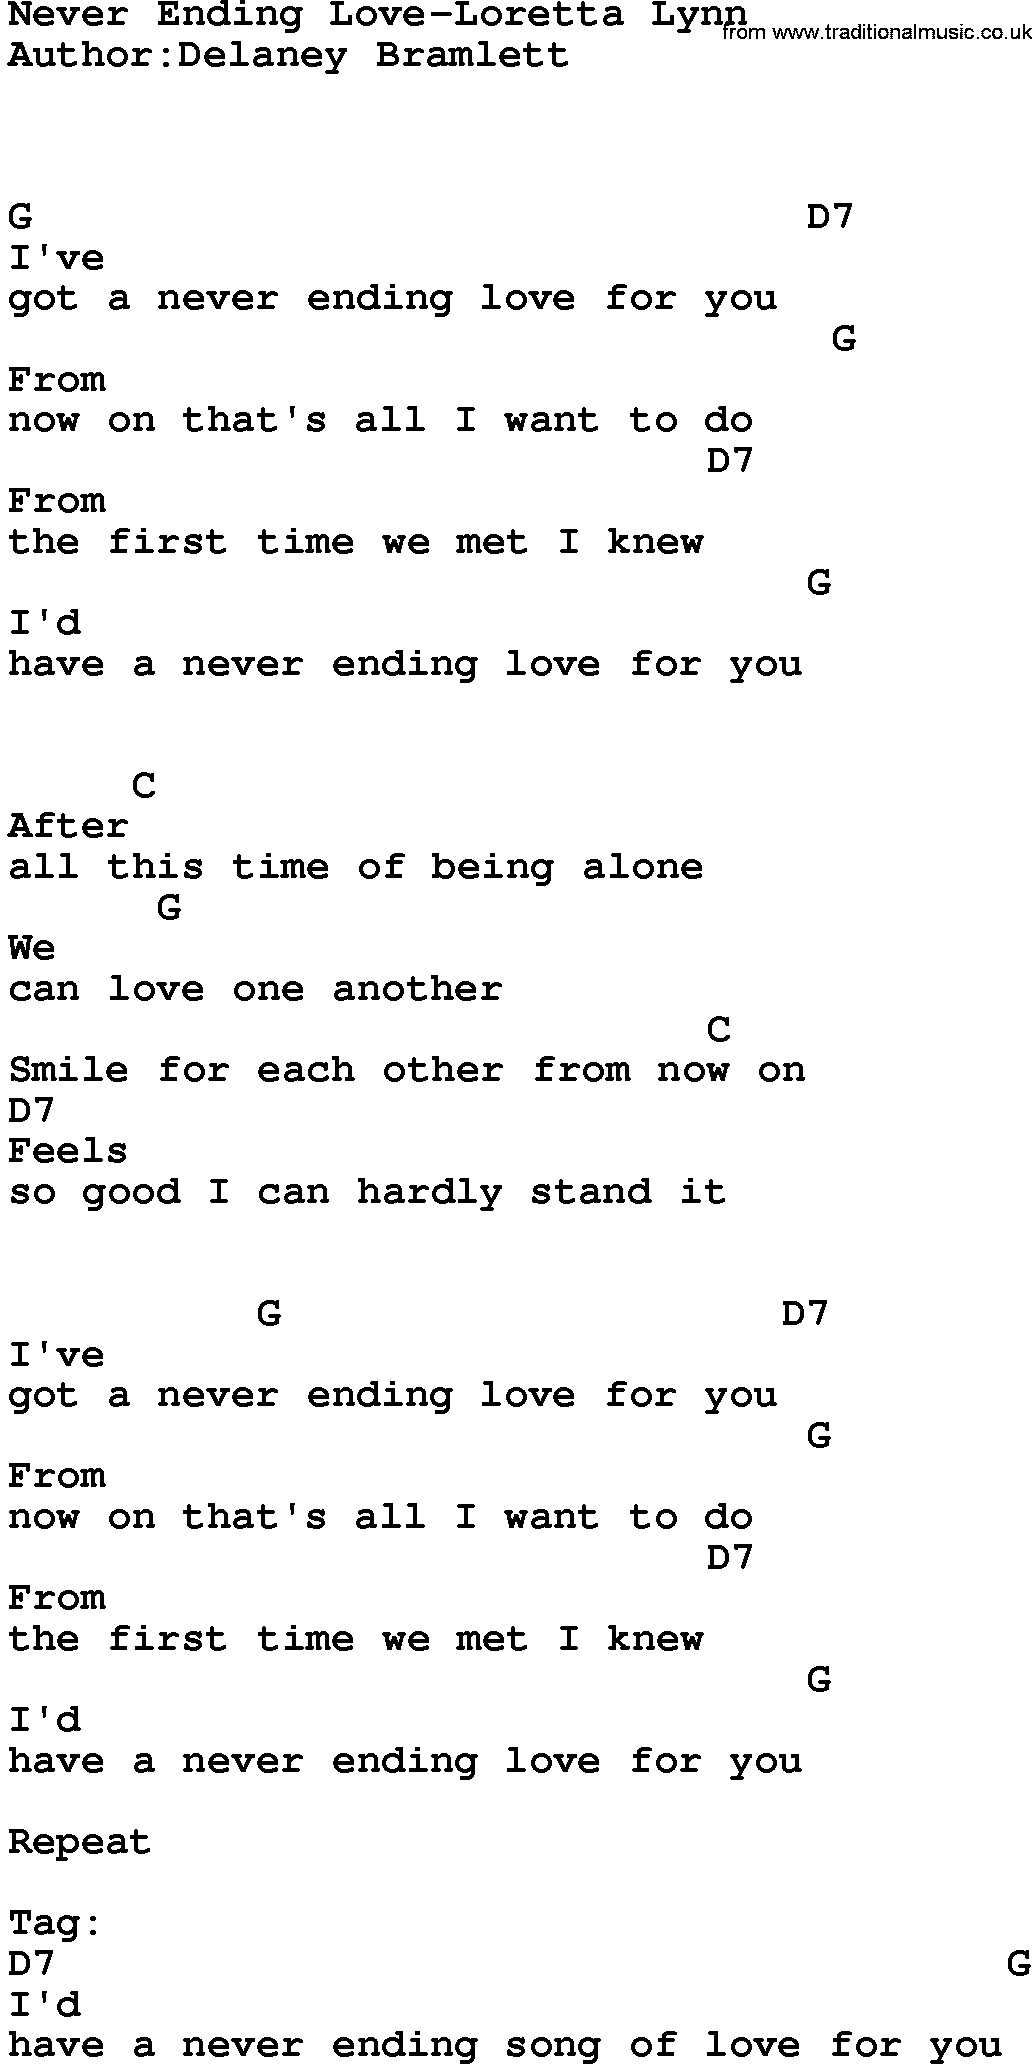 Country music song: Never Ending Love-Loretta Lynn lyrics and chords